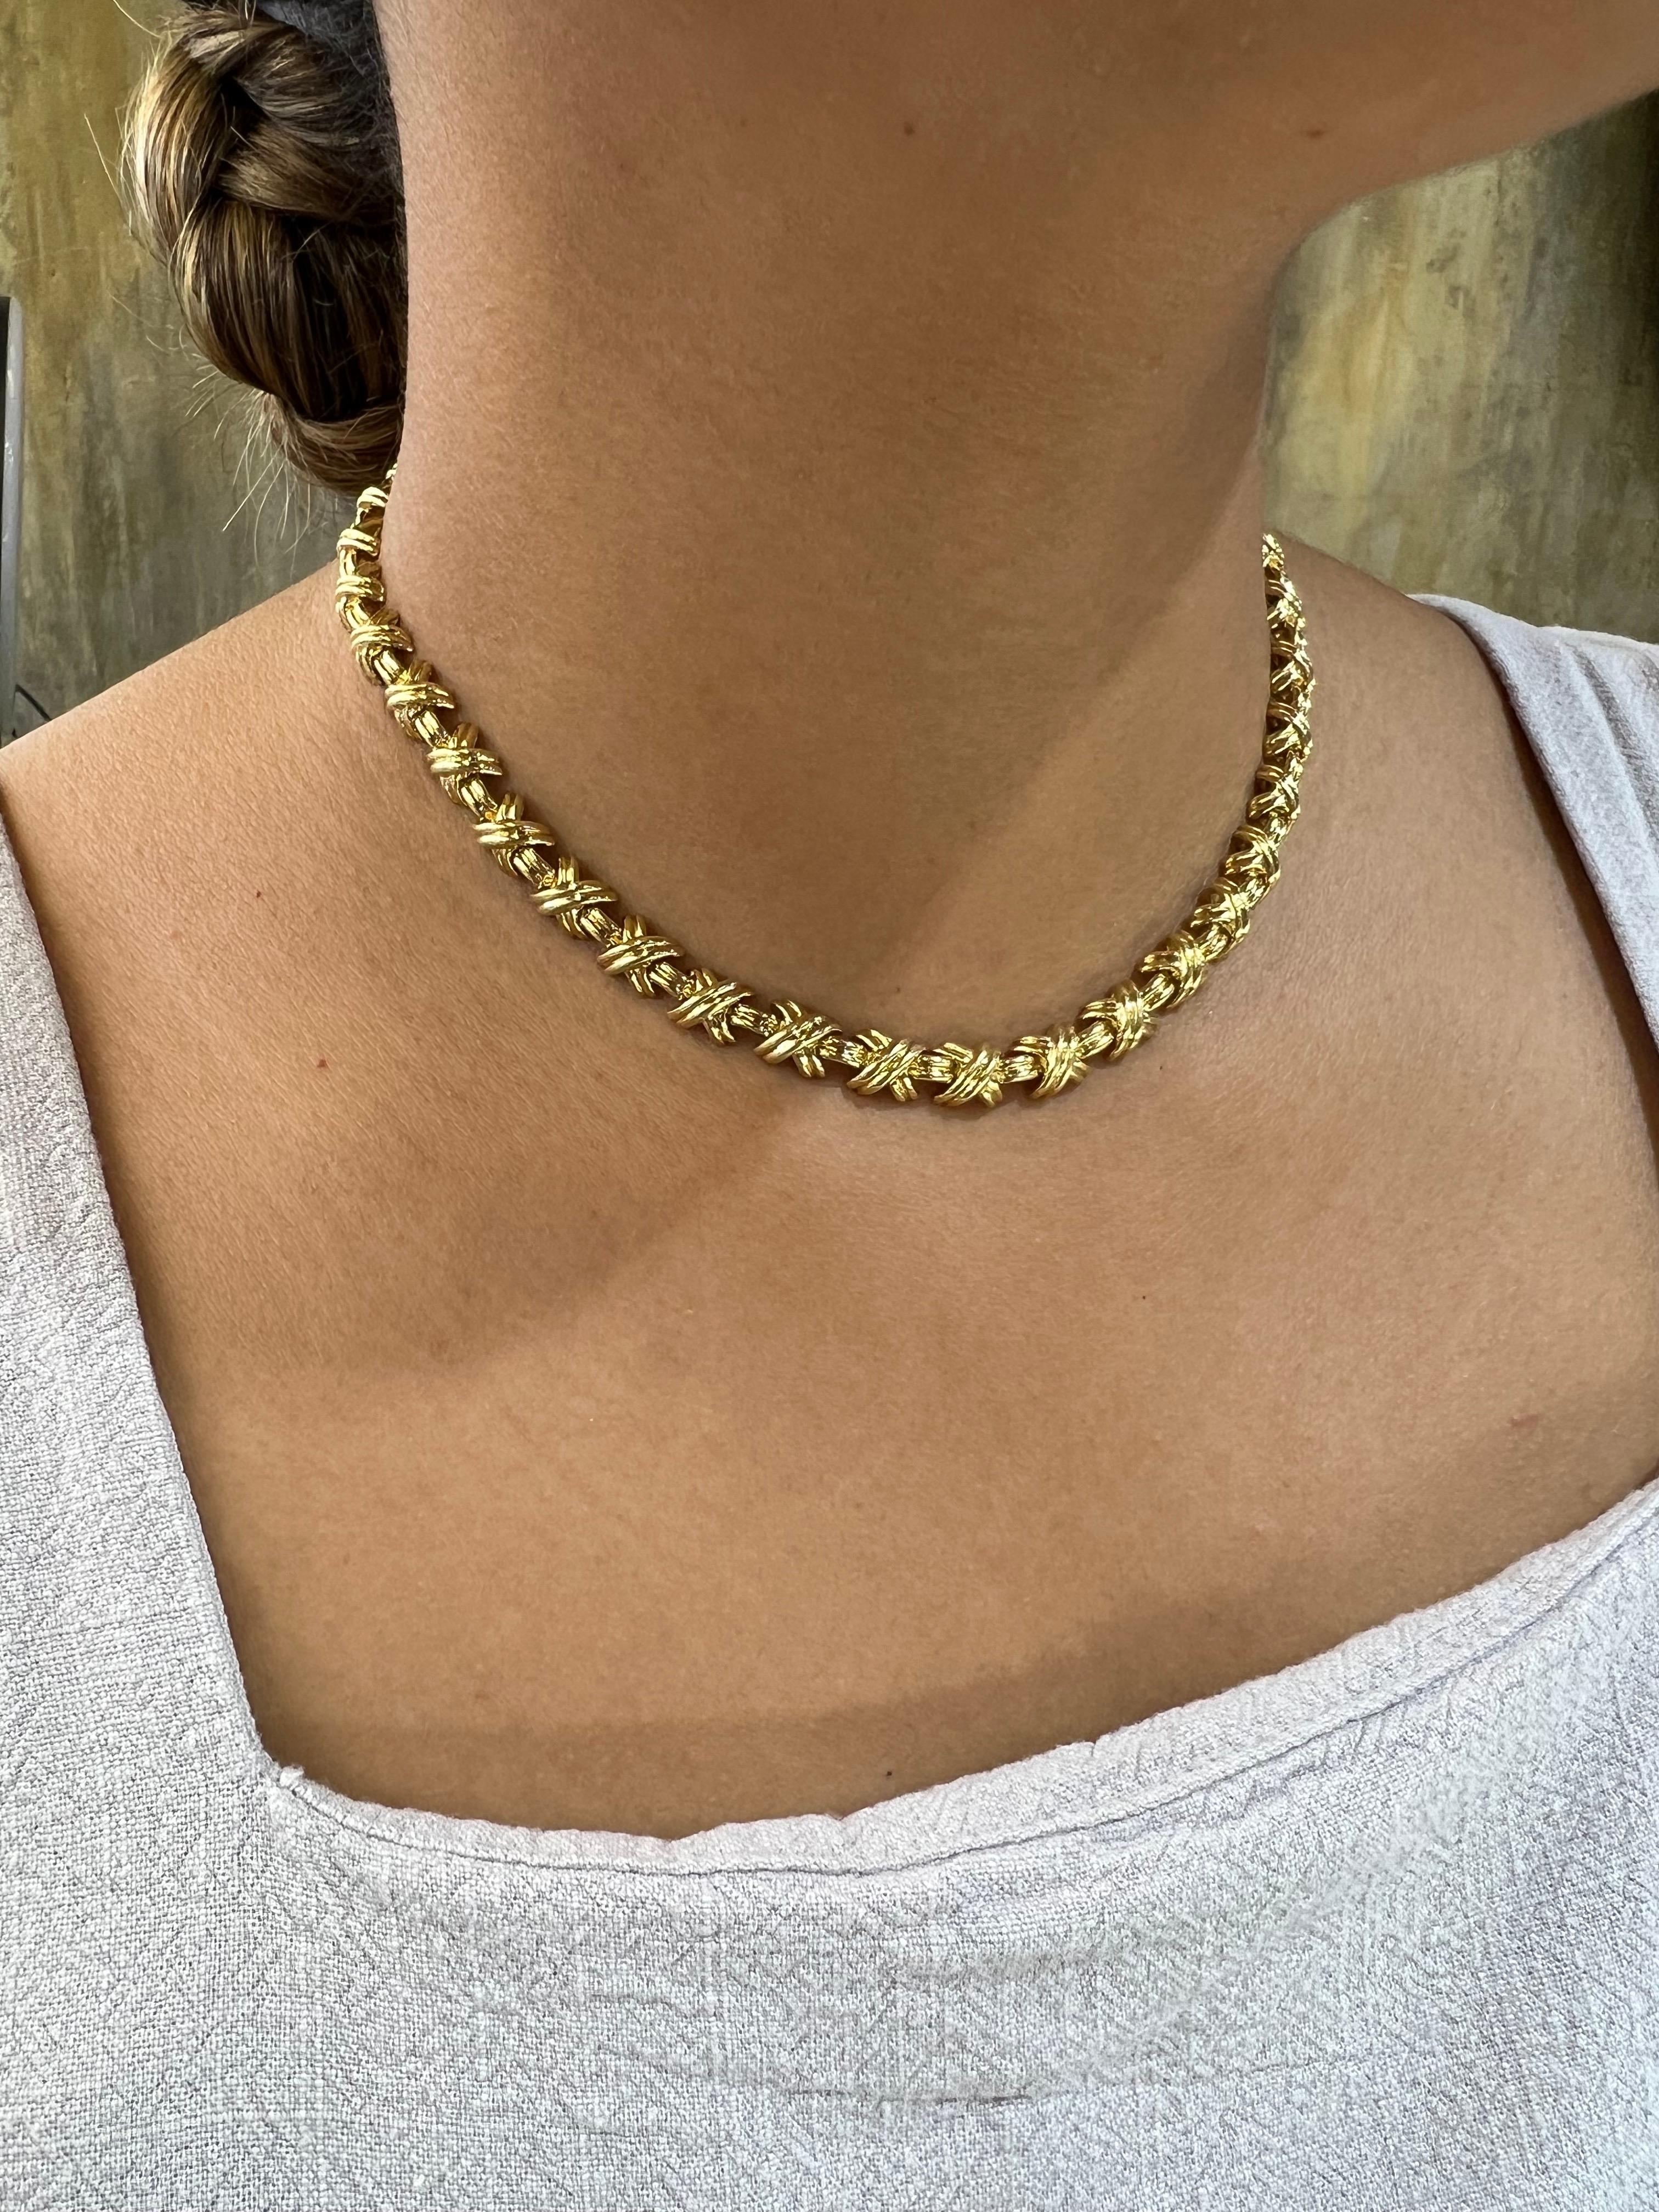 tiffany kiss necklace gold